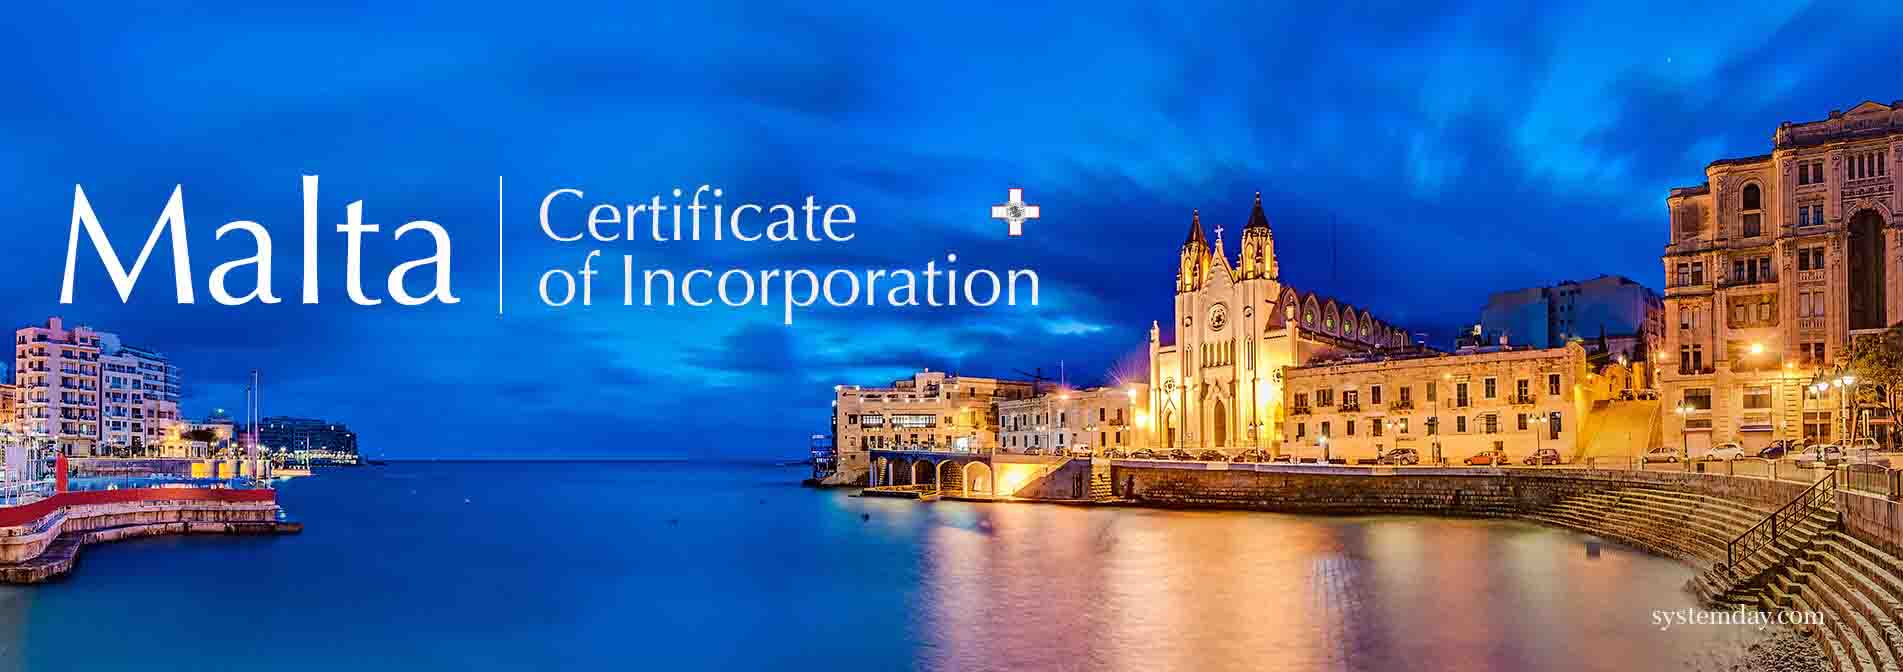 Malta Certificate of Incorporation